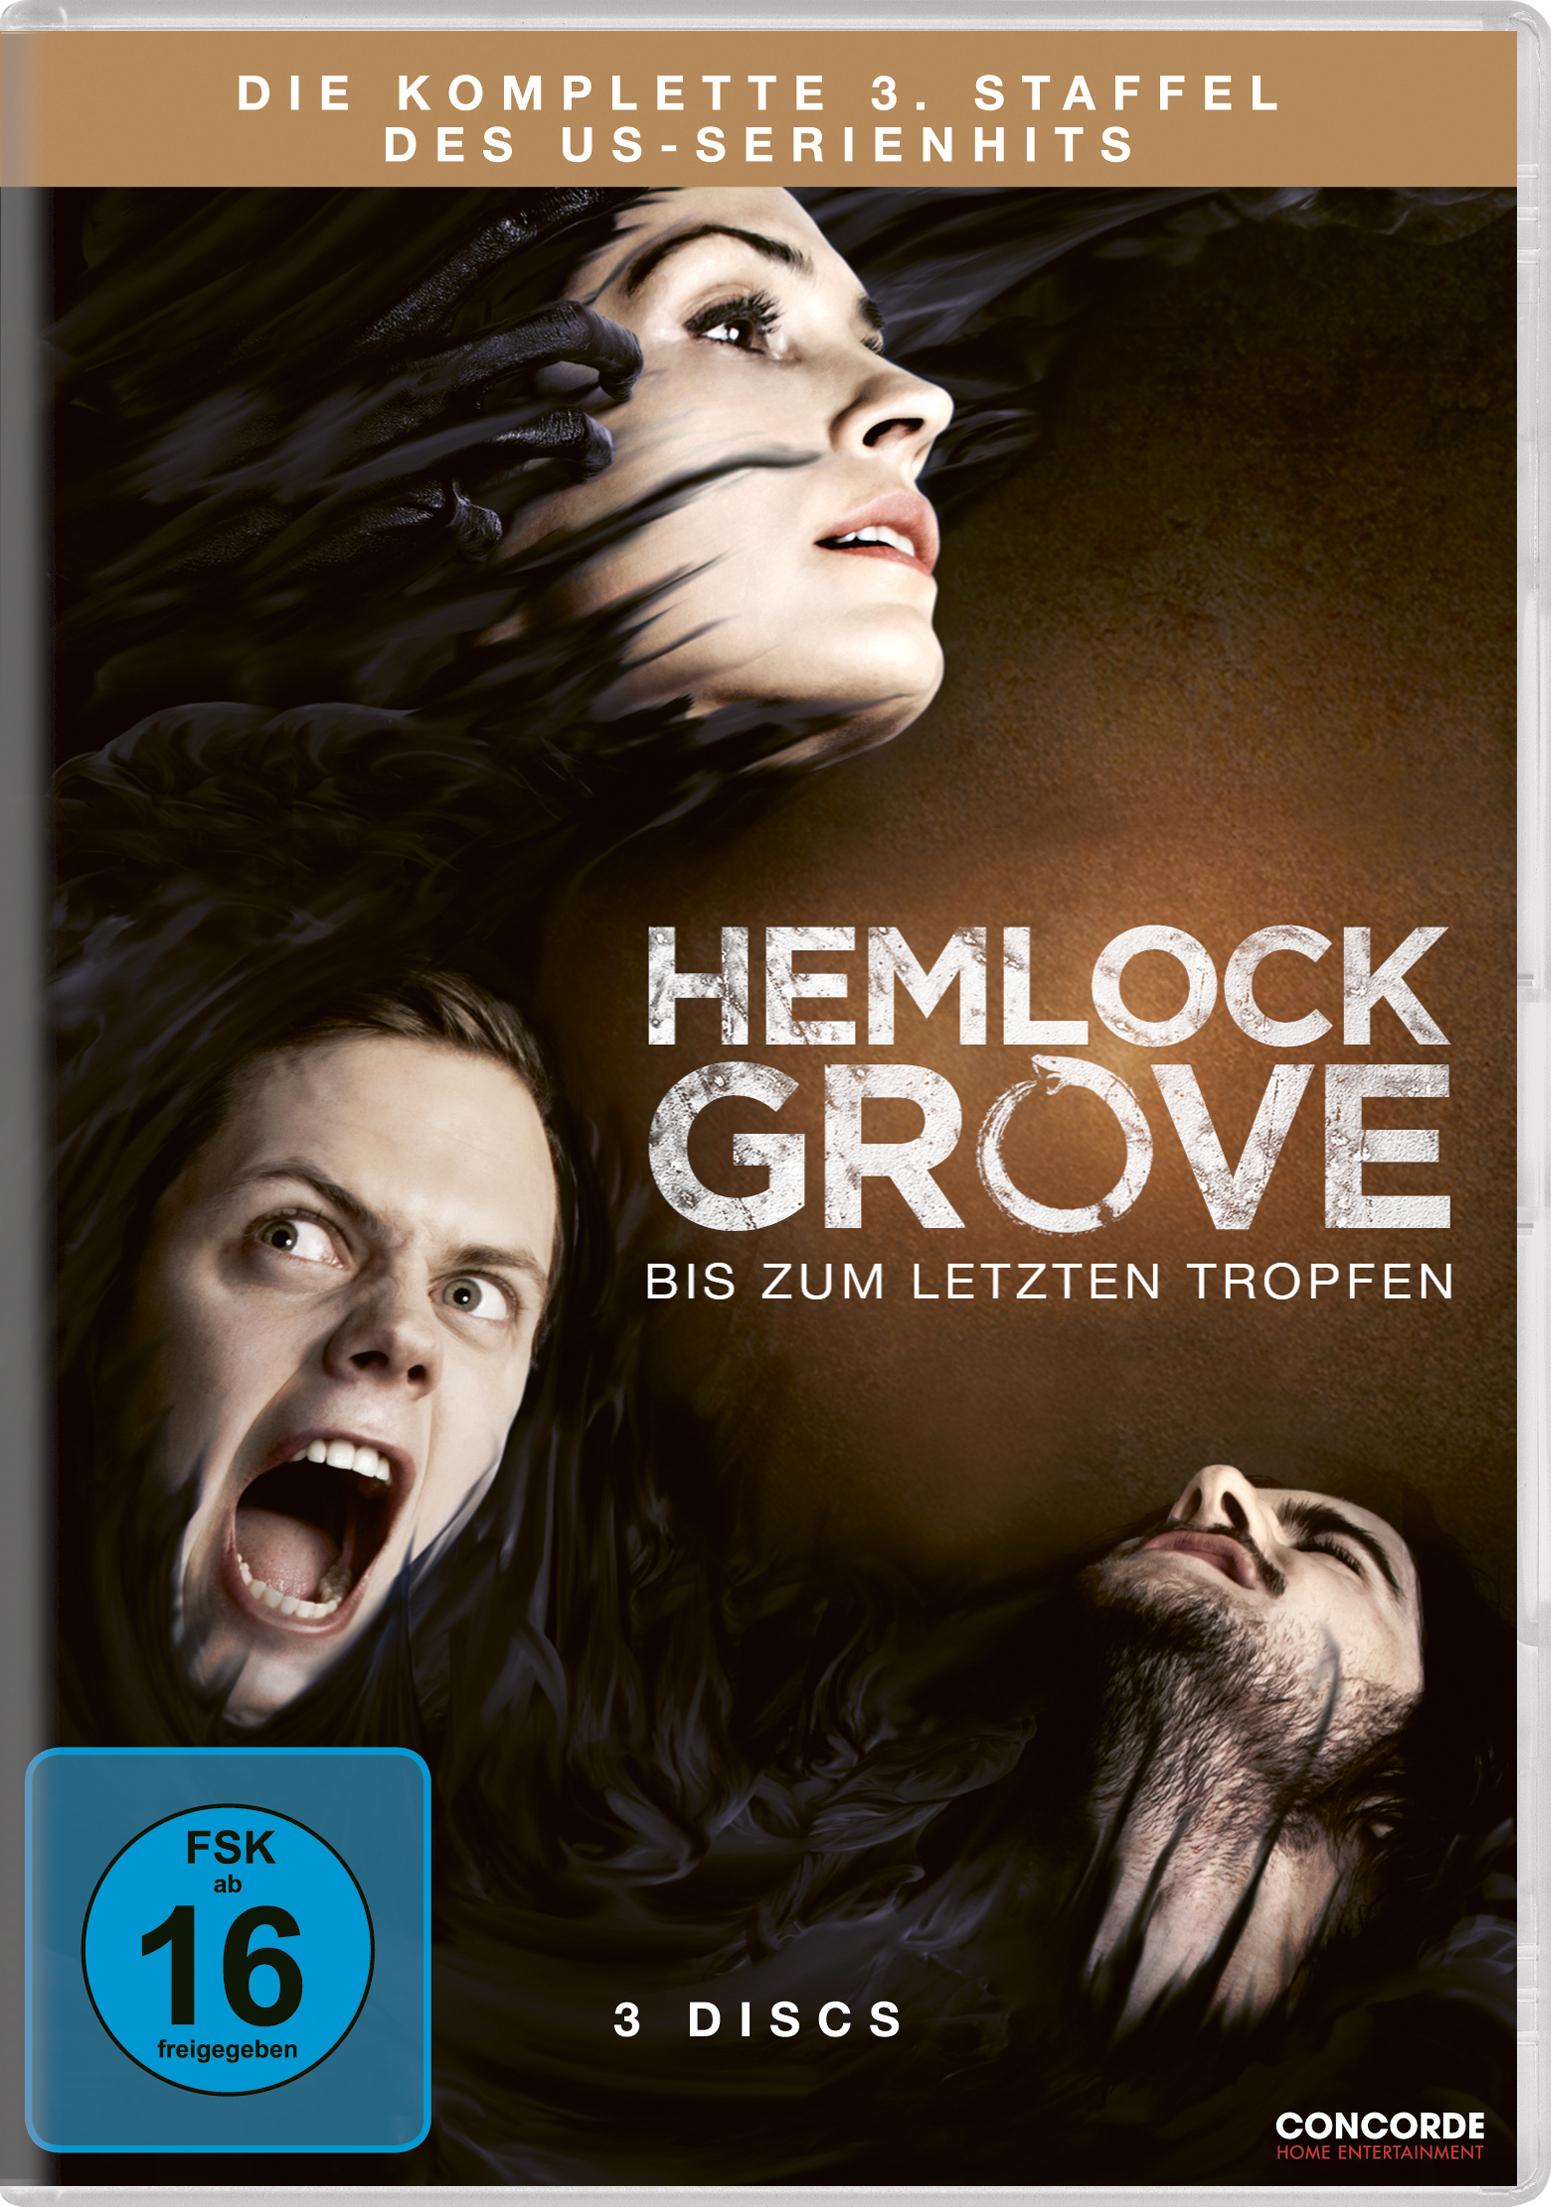 - Tropfen 3 - Bis Staffel zum Hemlock DVD letzten Grove